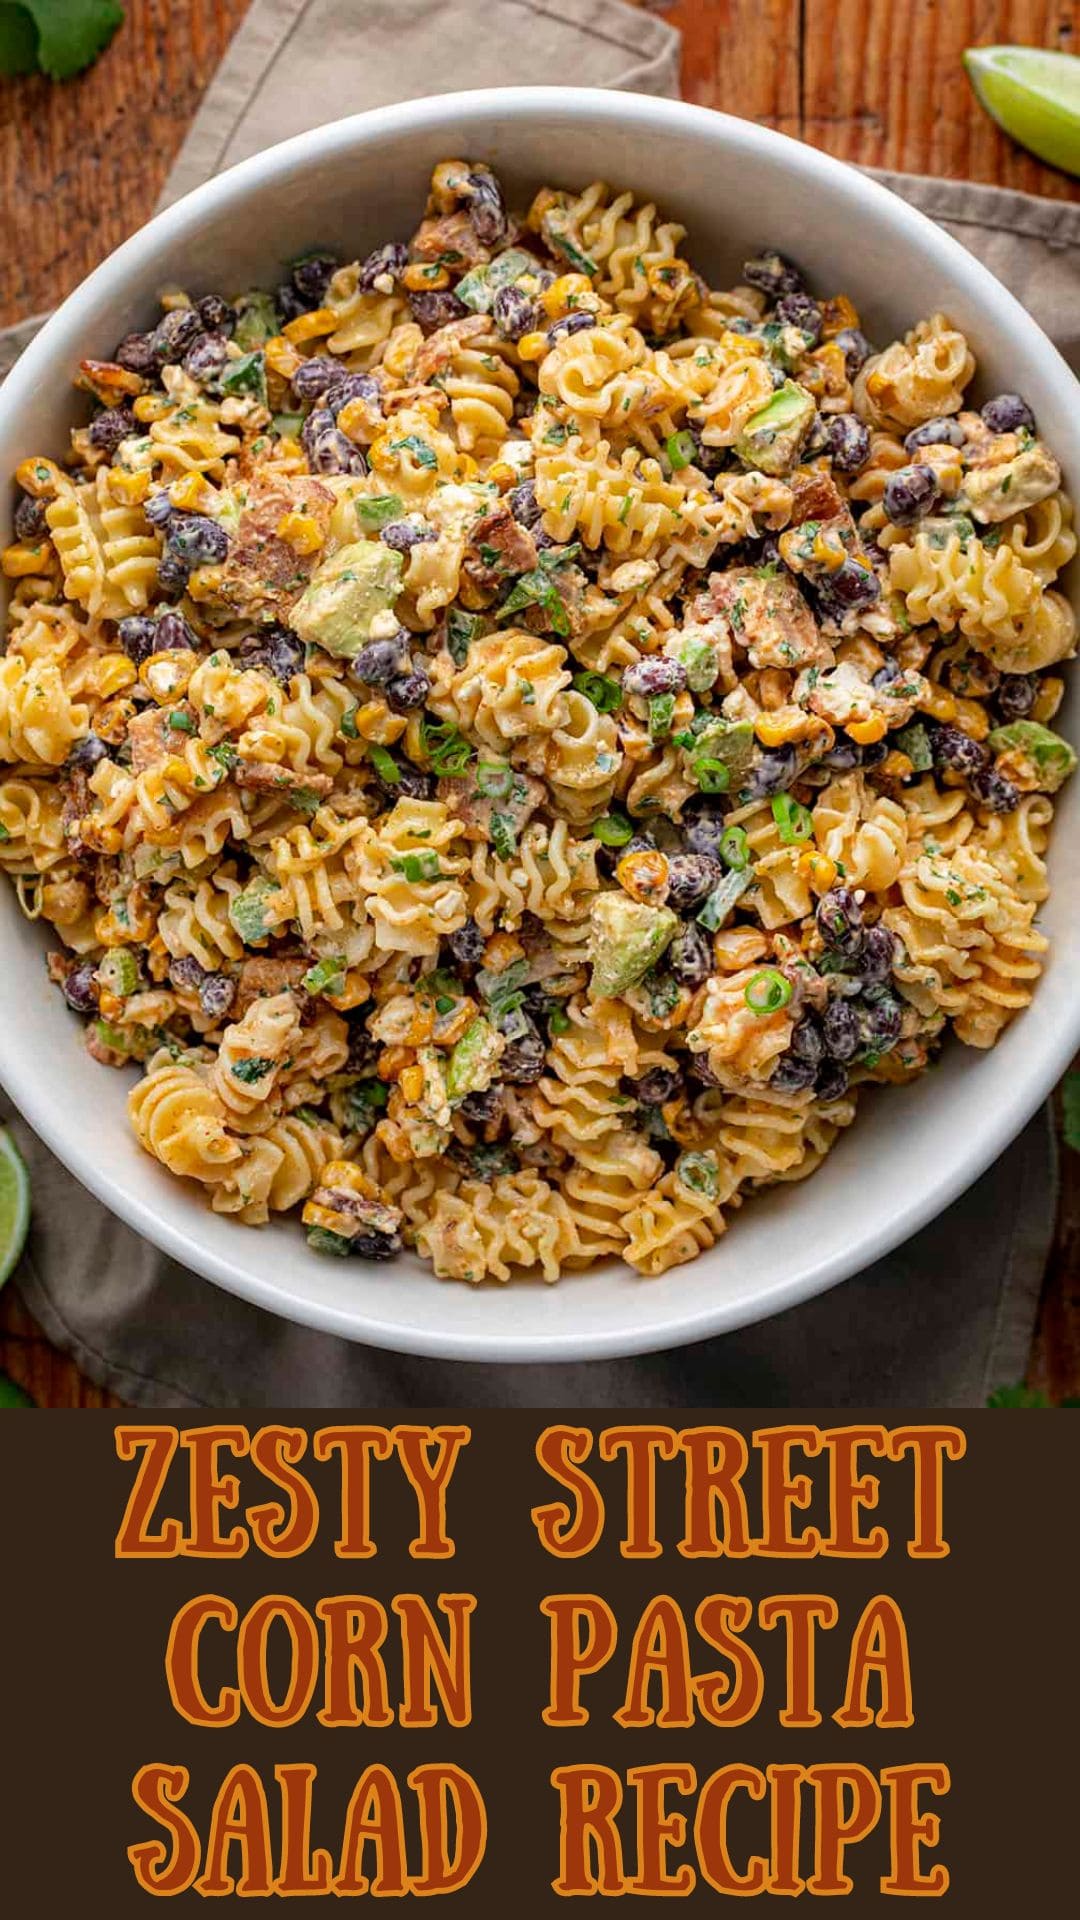 Zesty Street Corn Pasta Salad Recipe